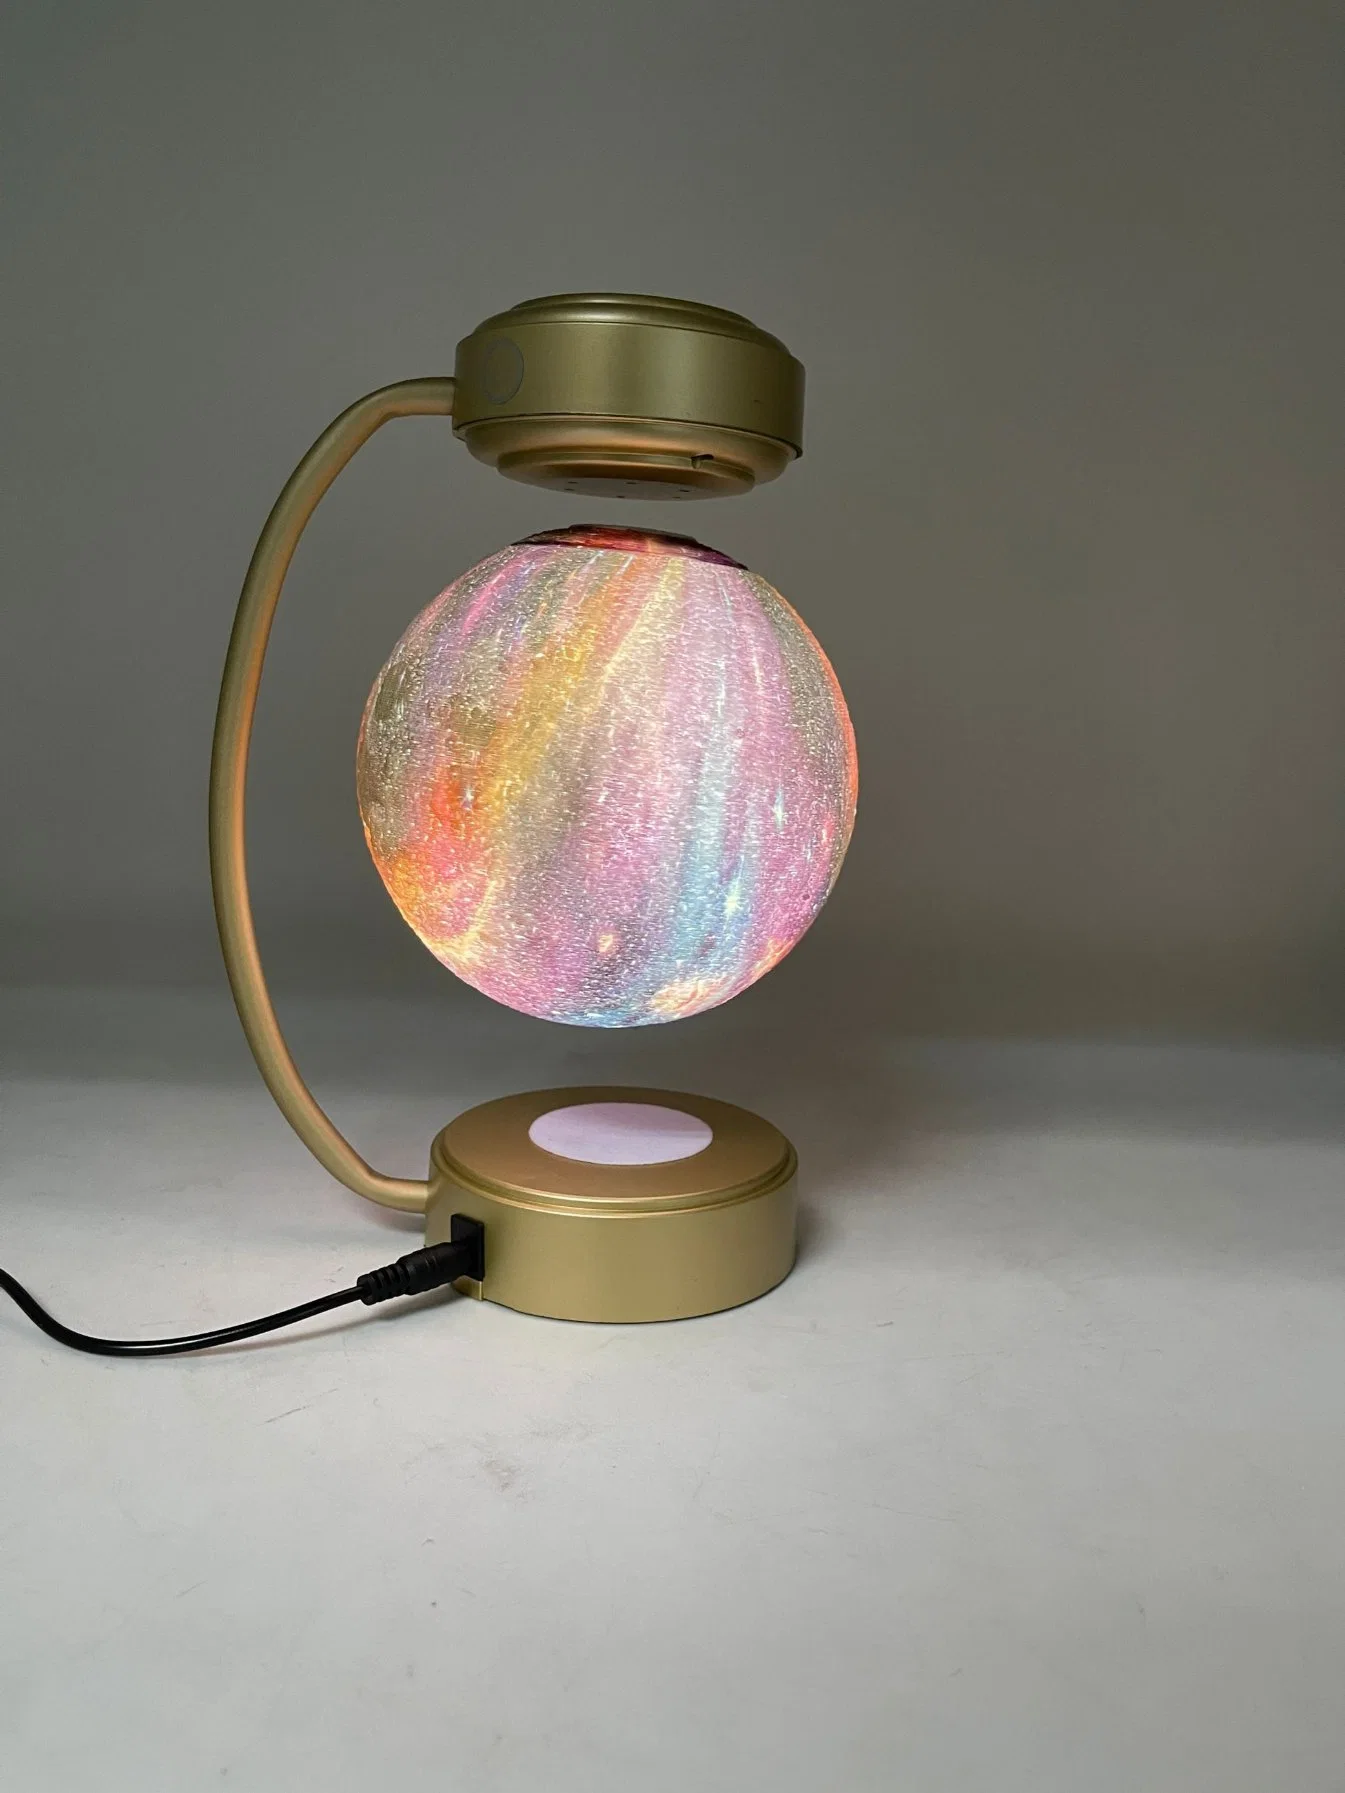 Hotsale Promotion Colorful LED Light Magnetic Floating Levitation Star Starry Moon Lamp Night Light for Desk Gift